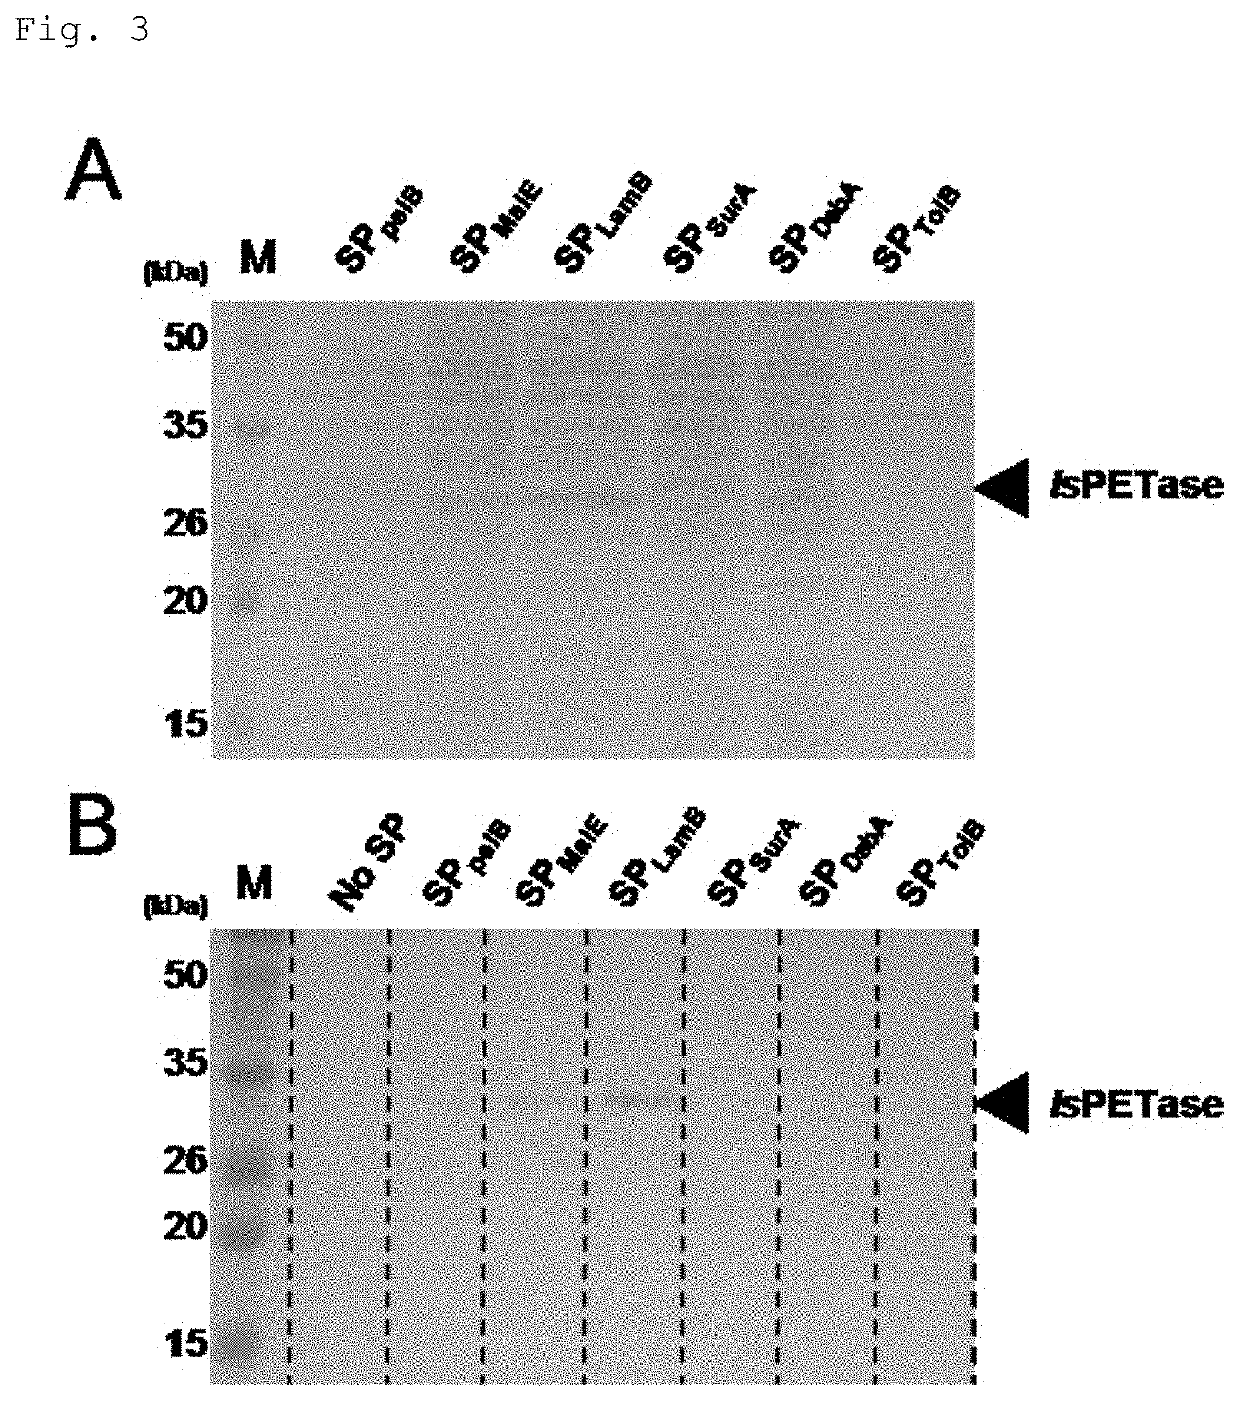 Recombinant petase producing strain, recombinant mhetase producing strain, and composition for degrading pet containing the same